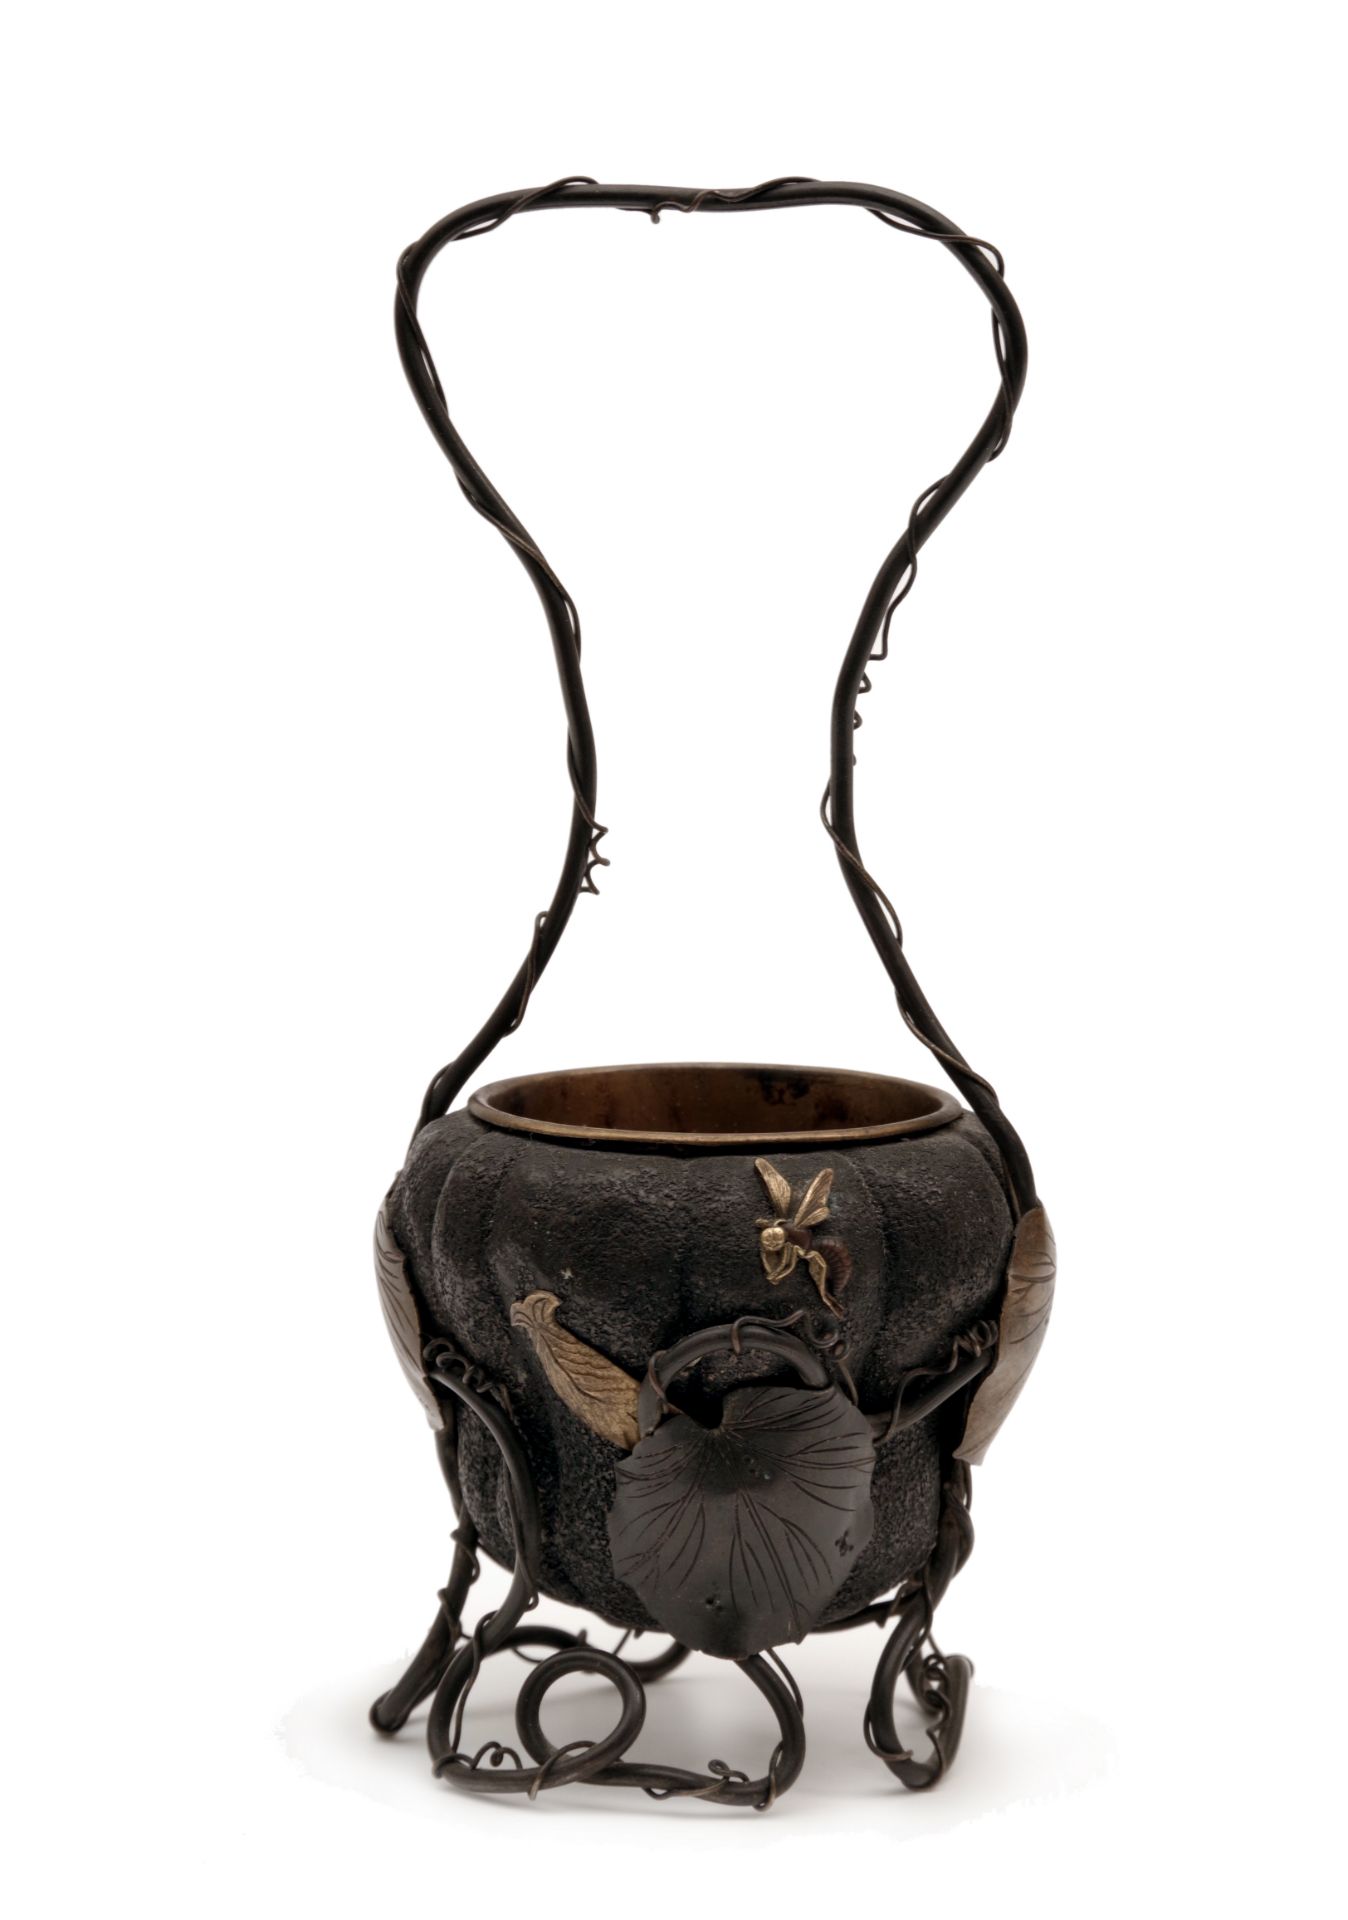 A Bronze Ikebana (Flower Arranging) Basket - Image 4 of 4